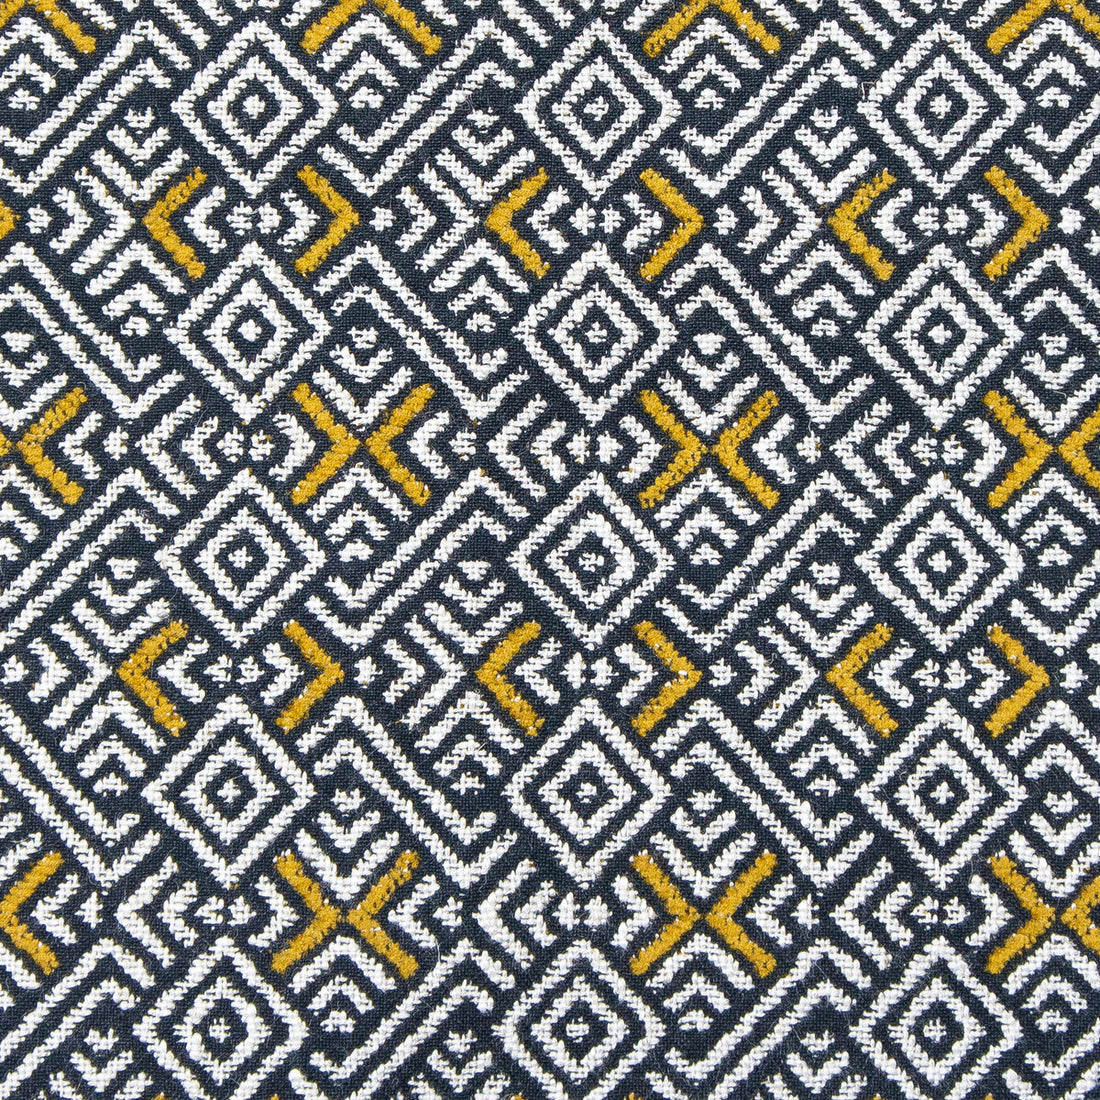 Inca fabric in amarillo color - pattern GDT5567.001.0 - by Gaston y Daniela in the Gaston Nuevo Mundo collection